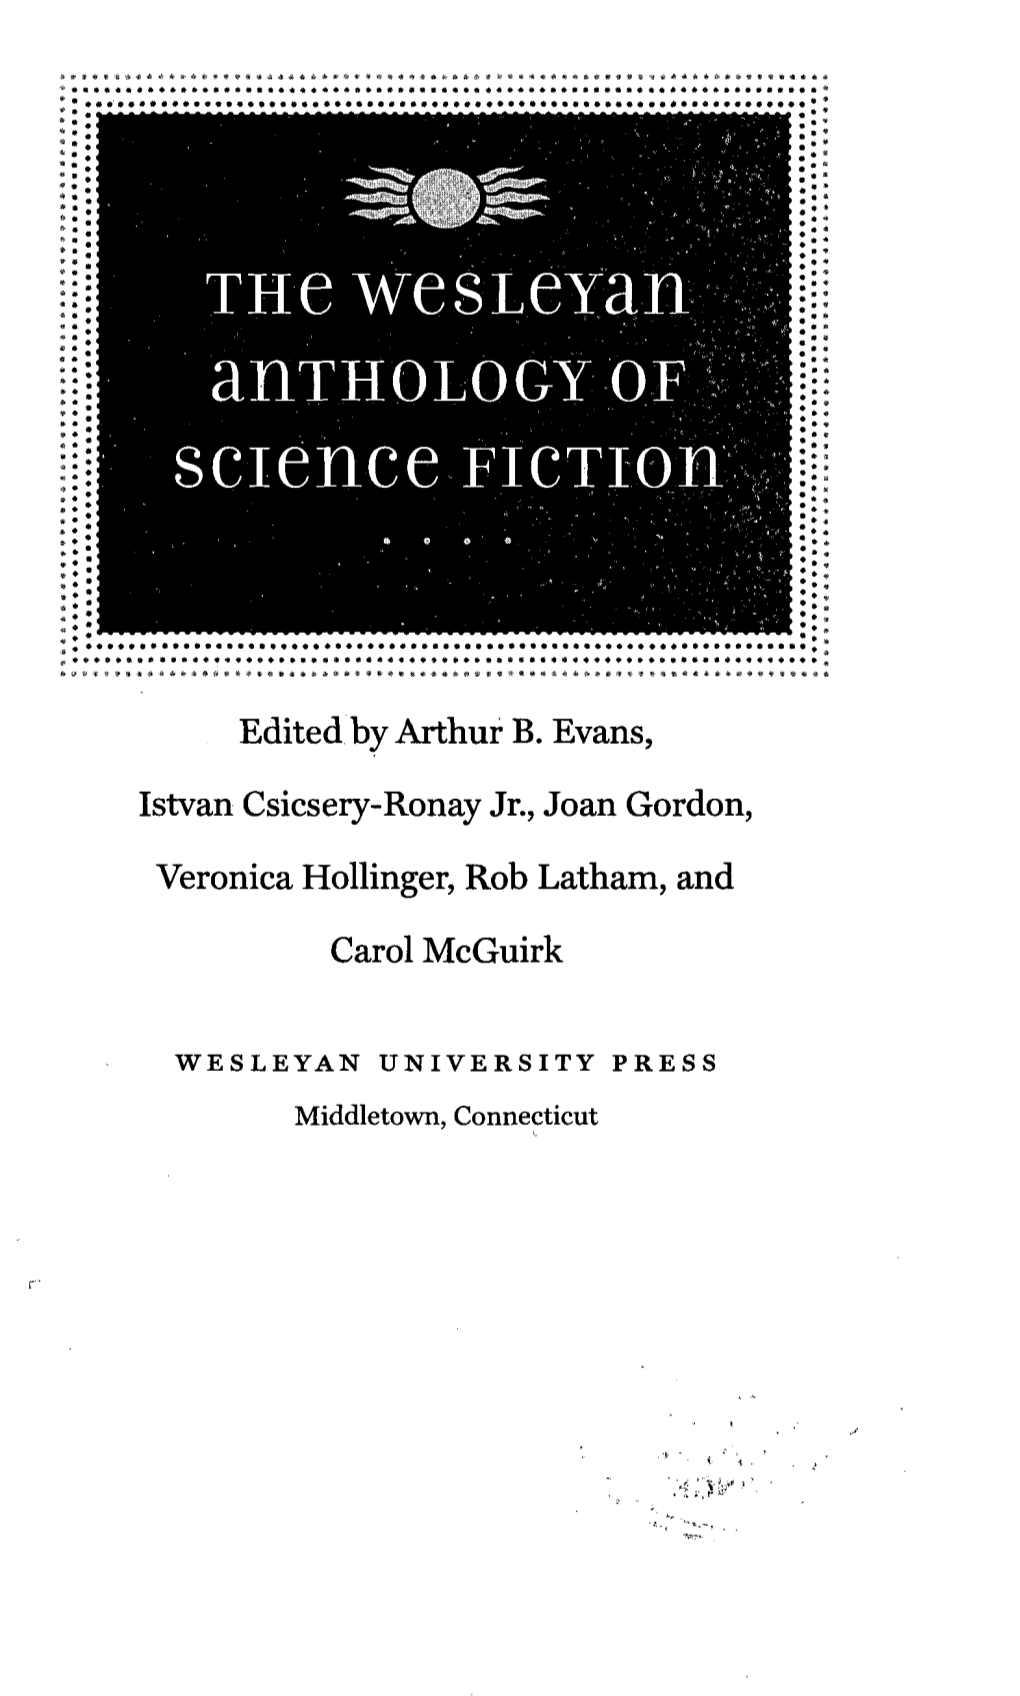 Edited by Arthur B. Evans, Istvan Csicsery-Ronay Jr., Joan Gordon, Veronica Hollinger, Rob Latham, and Carol Mcguirk